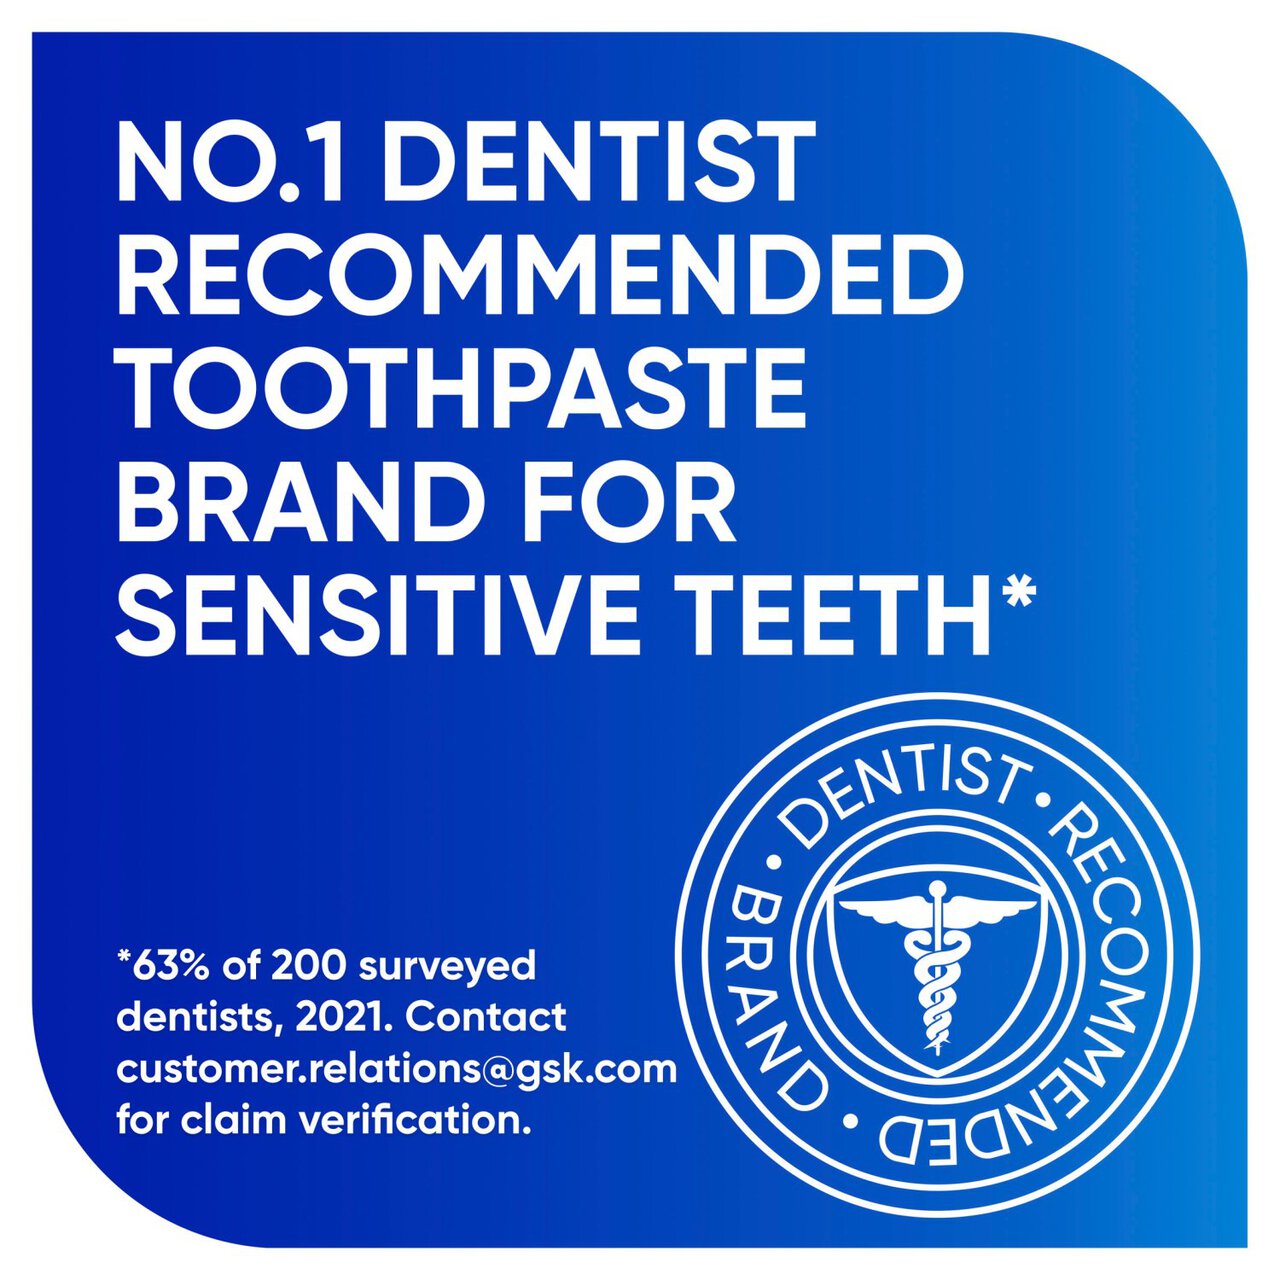 Sensodyne Repair and Protect Toothpaste Deep Repair 75ml